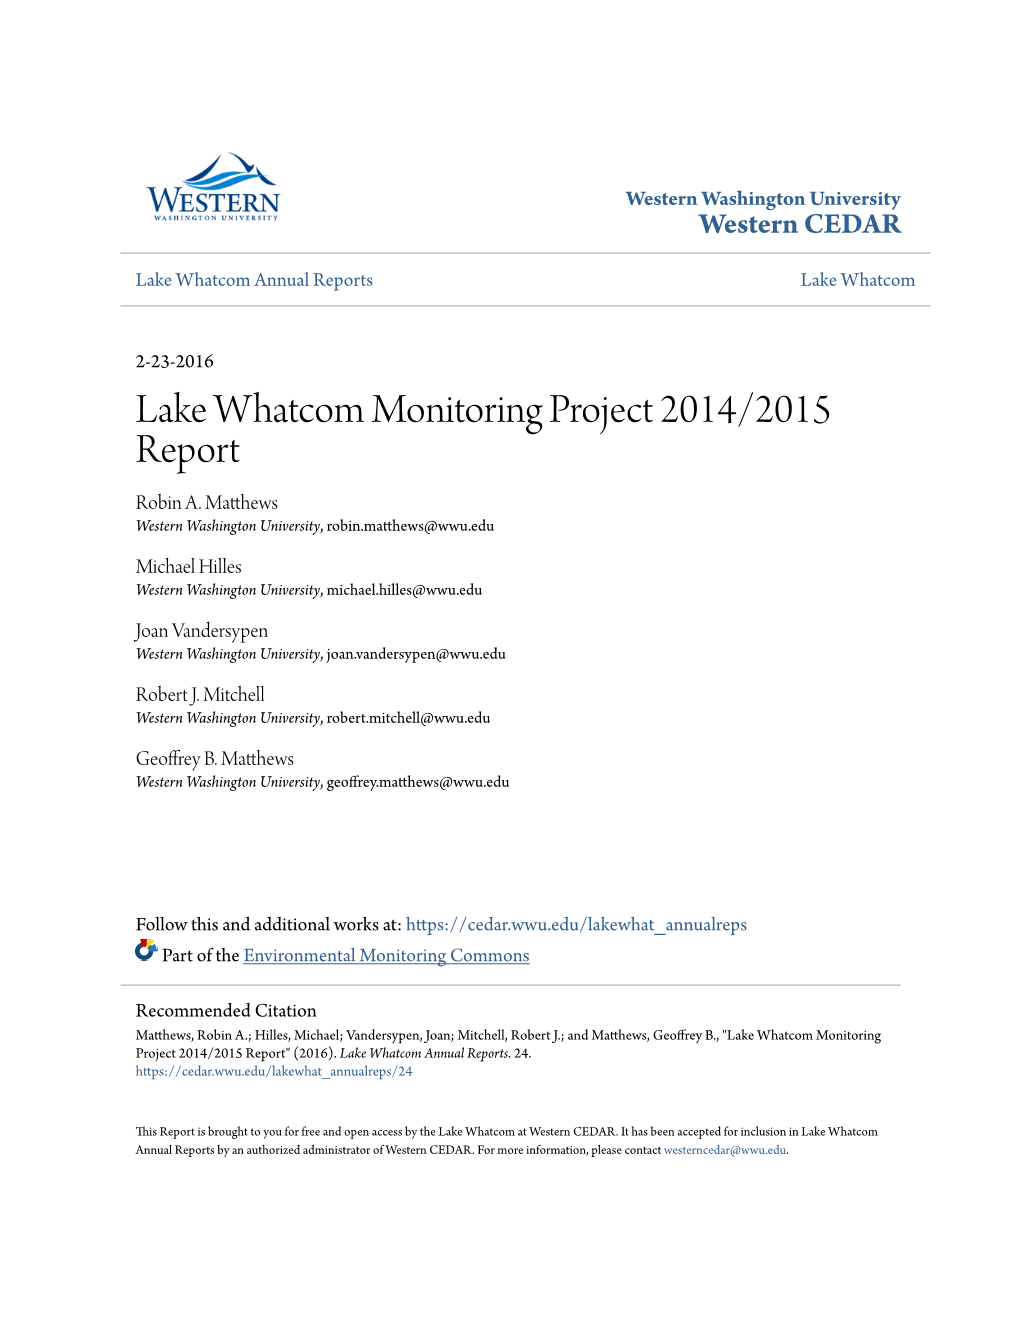 Lake Whatcom Monitoring Project 2014/2015 Report Robin A